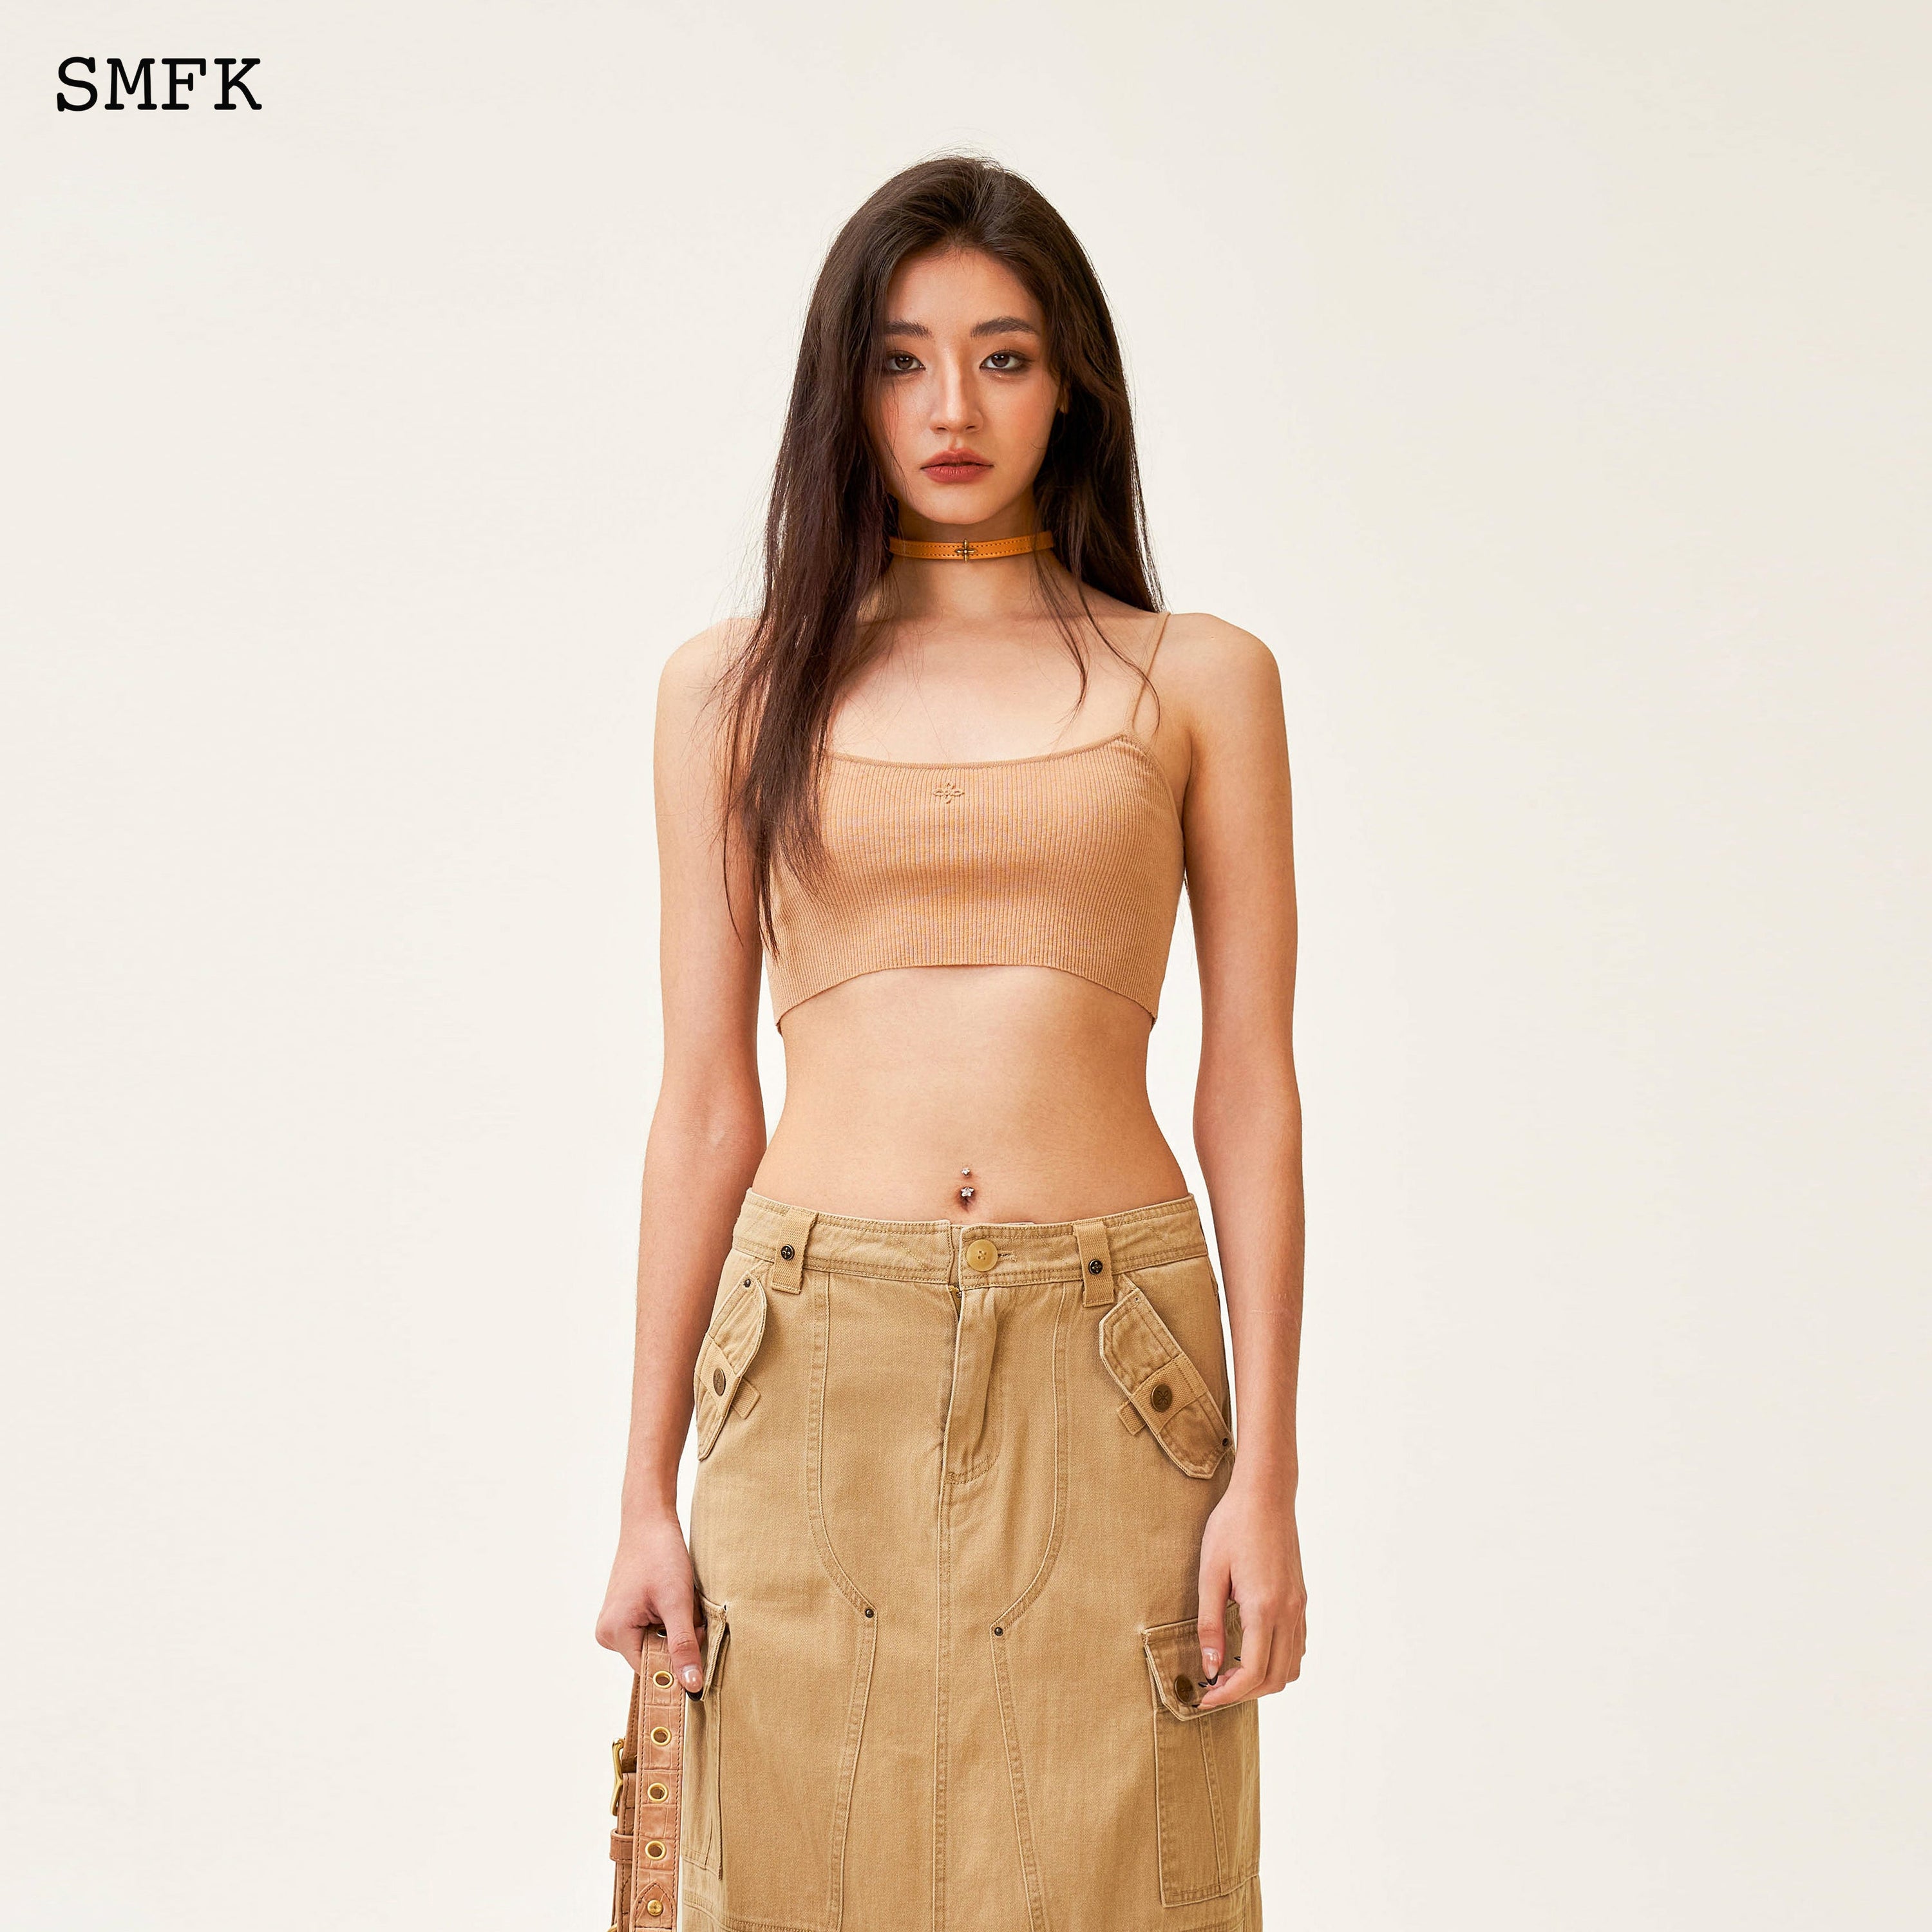 Ancient Myth Tarpan Workwear Long Skirt Wheat - SMFK Official